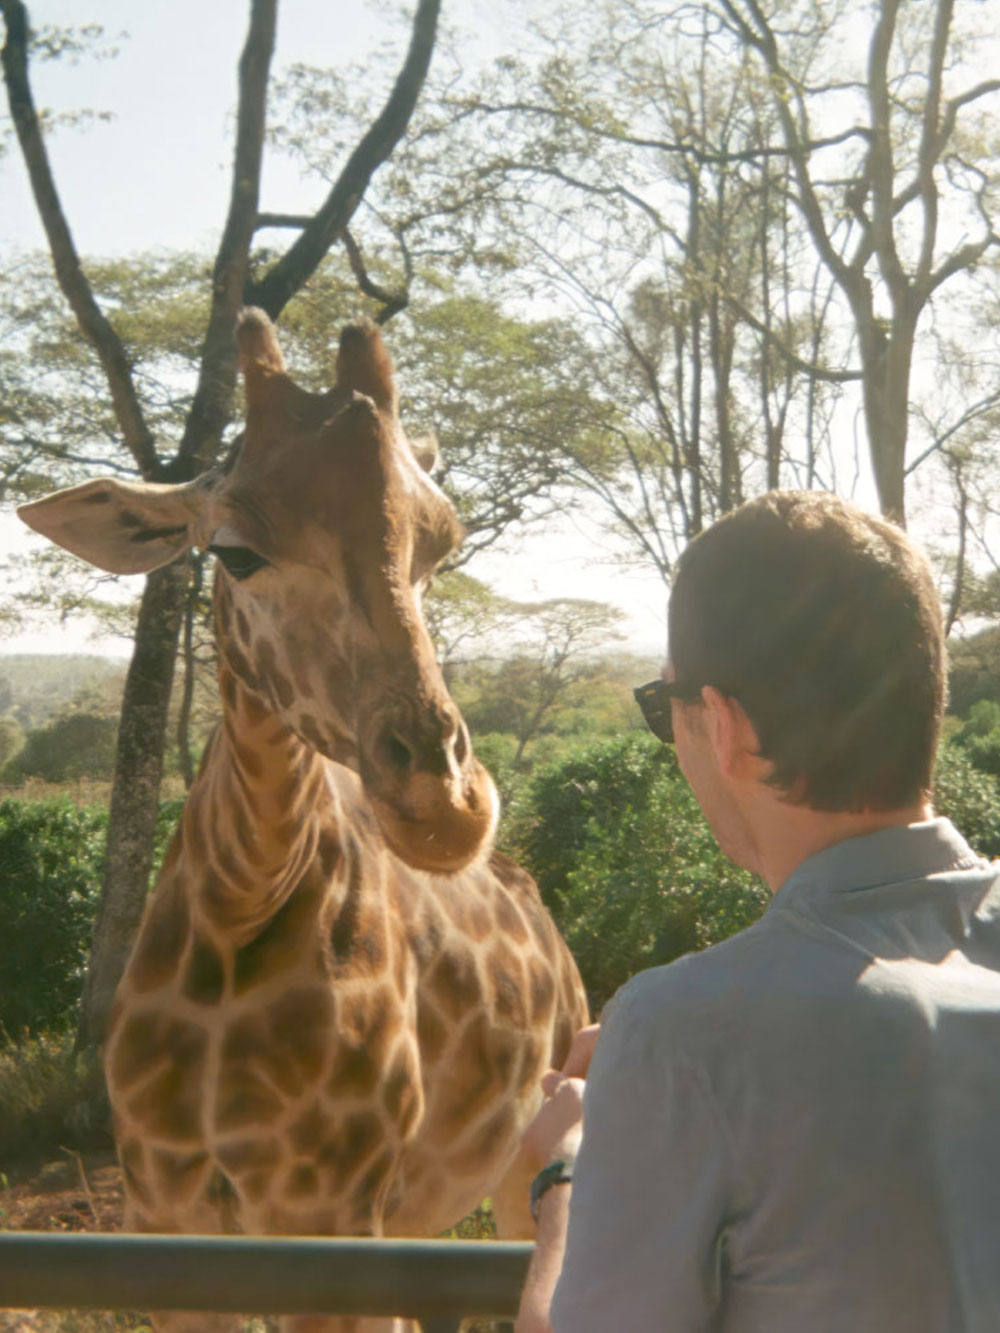 Dave Savage at the Nairobi Giraffe Centre